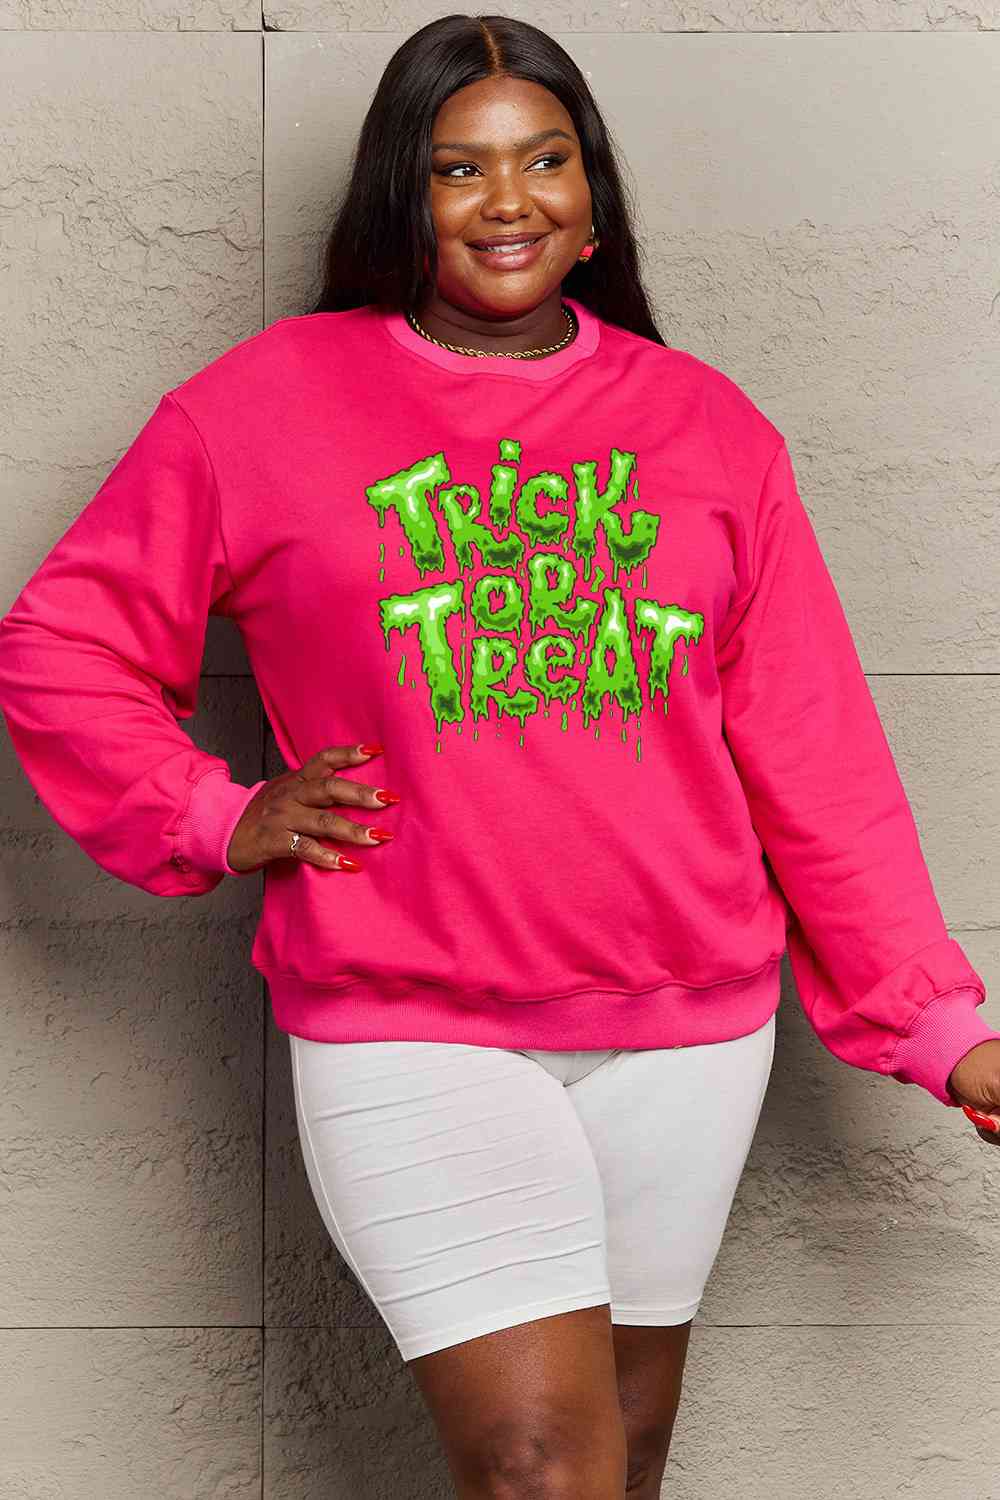 TRICK OR TREAT Graphic Sweatshirt